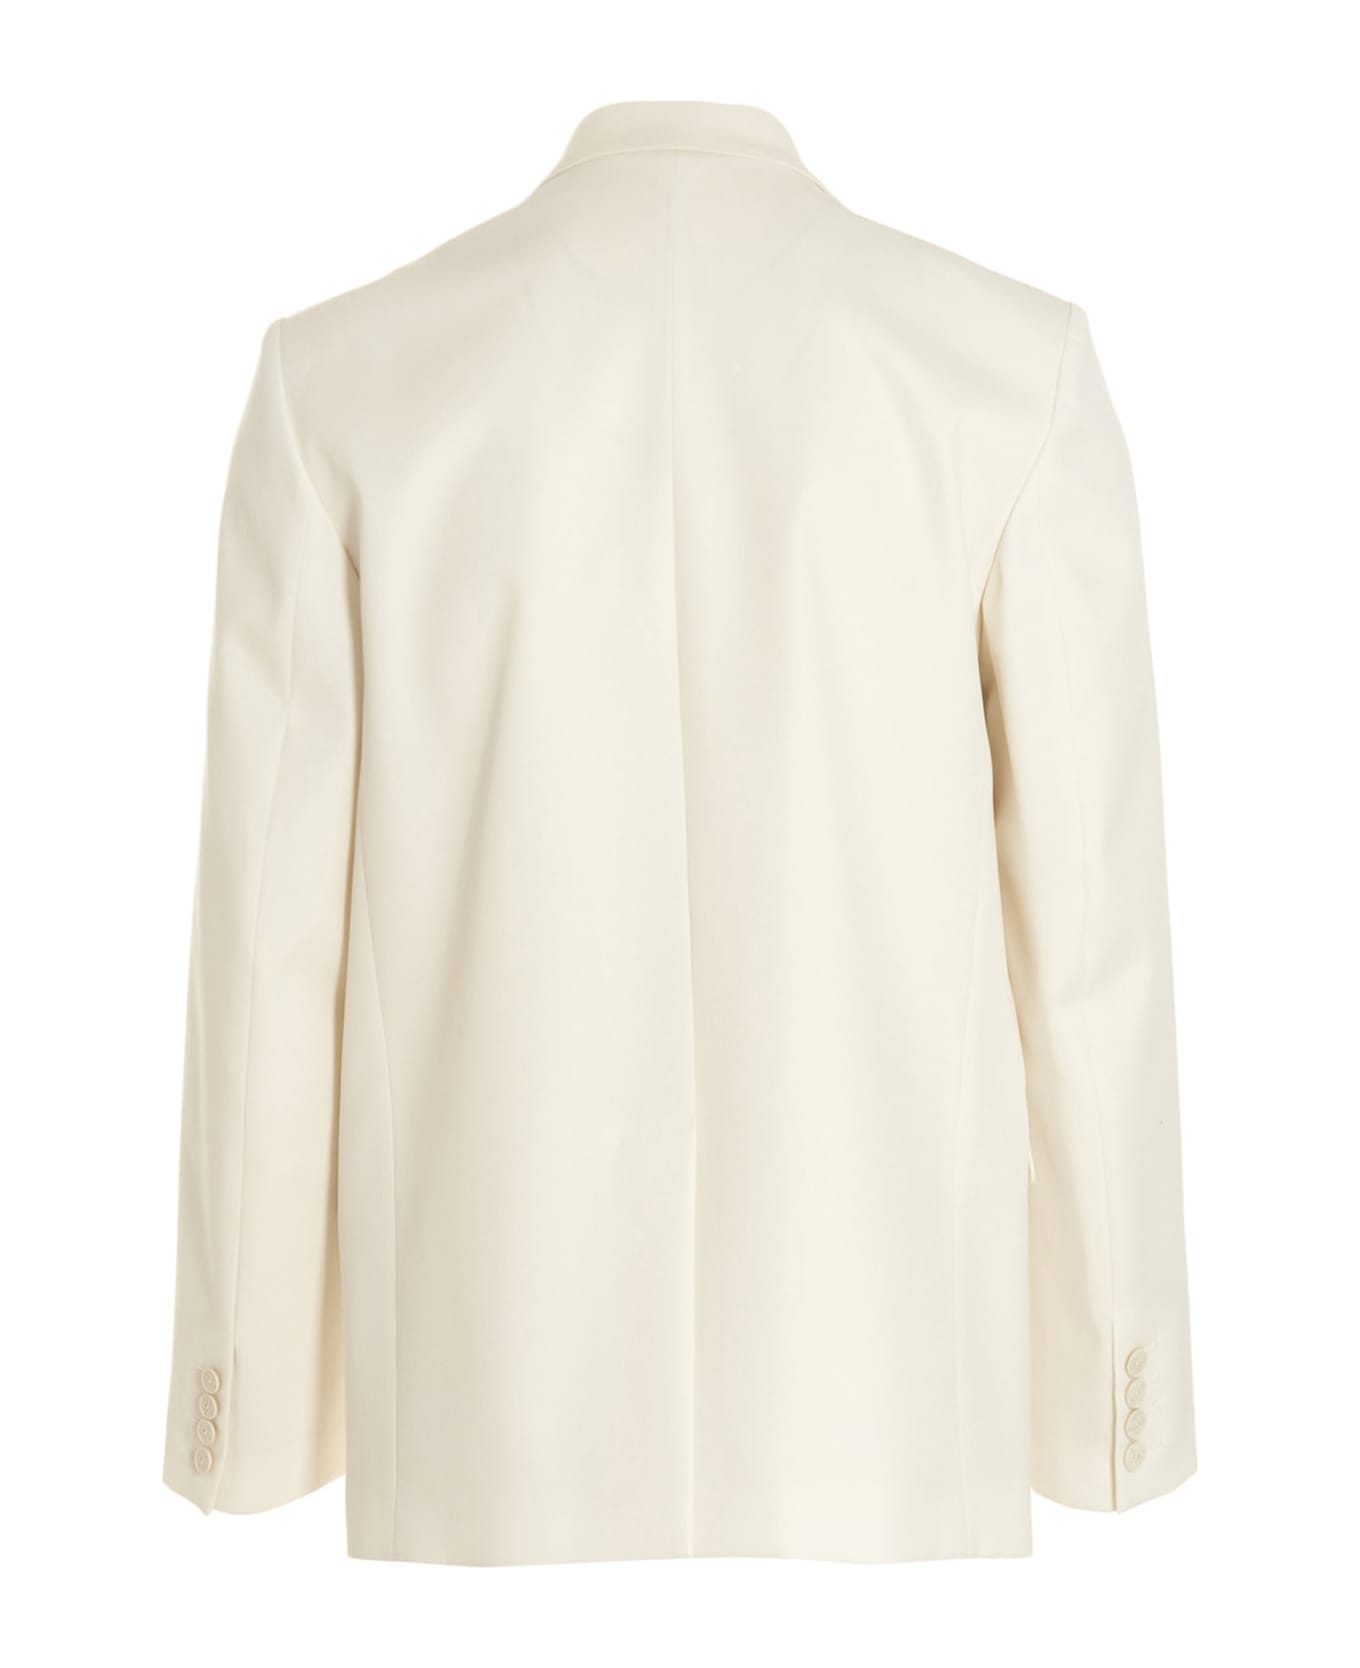 Valentino Garavani Wool Double Breast Blazer Jacket - White ブレザー